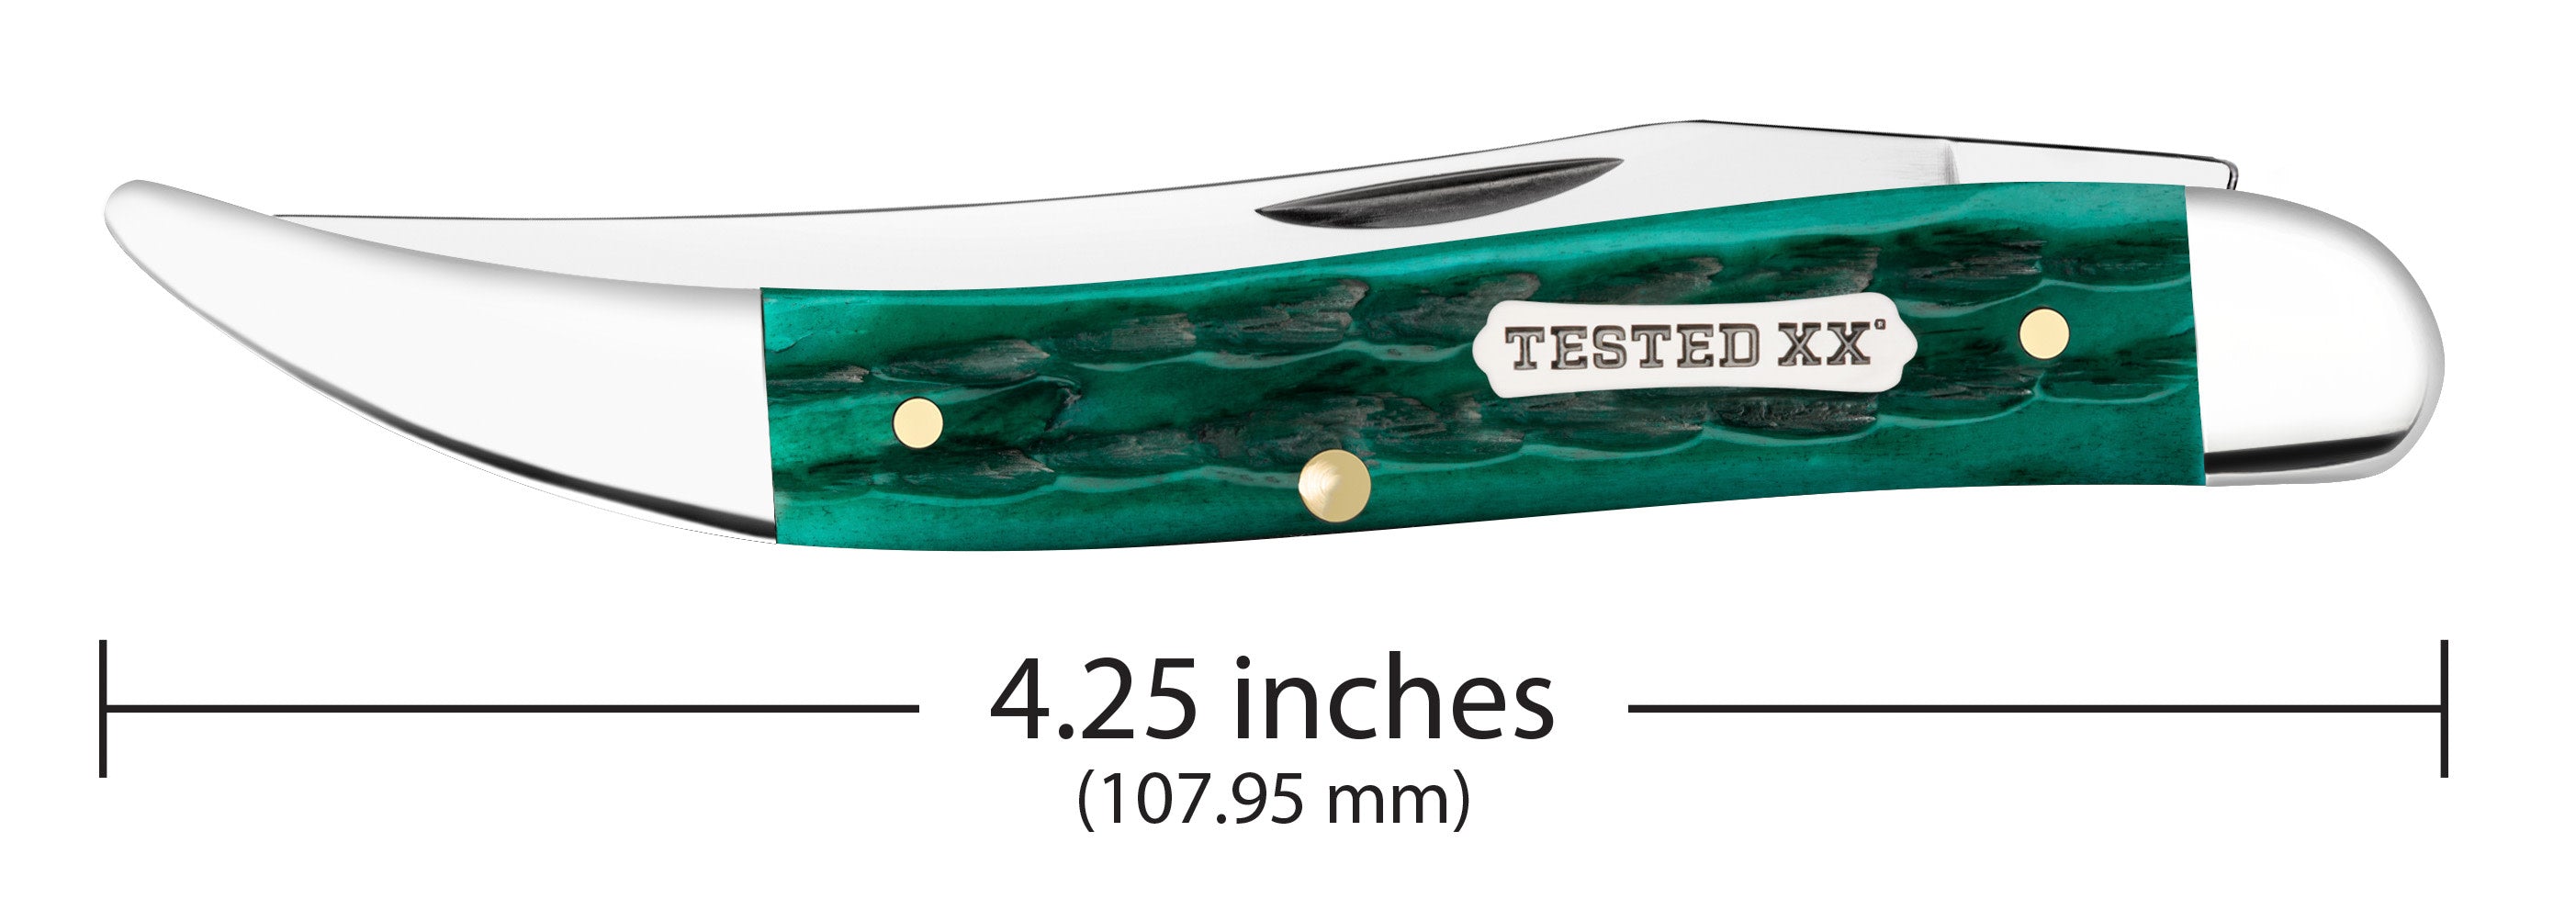 Kinfolk Jig Jade Bone Medium Texas Toothpick Knife Dimensions